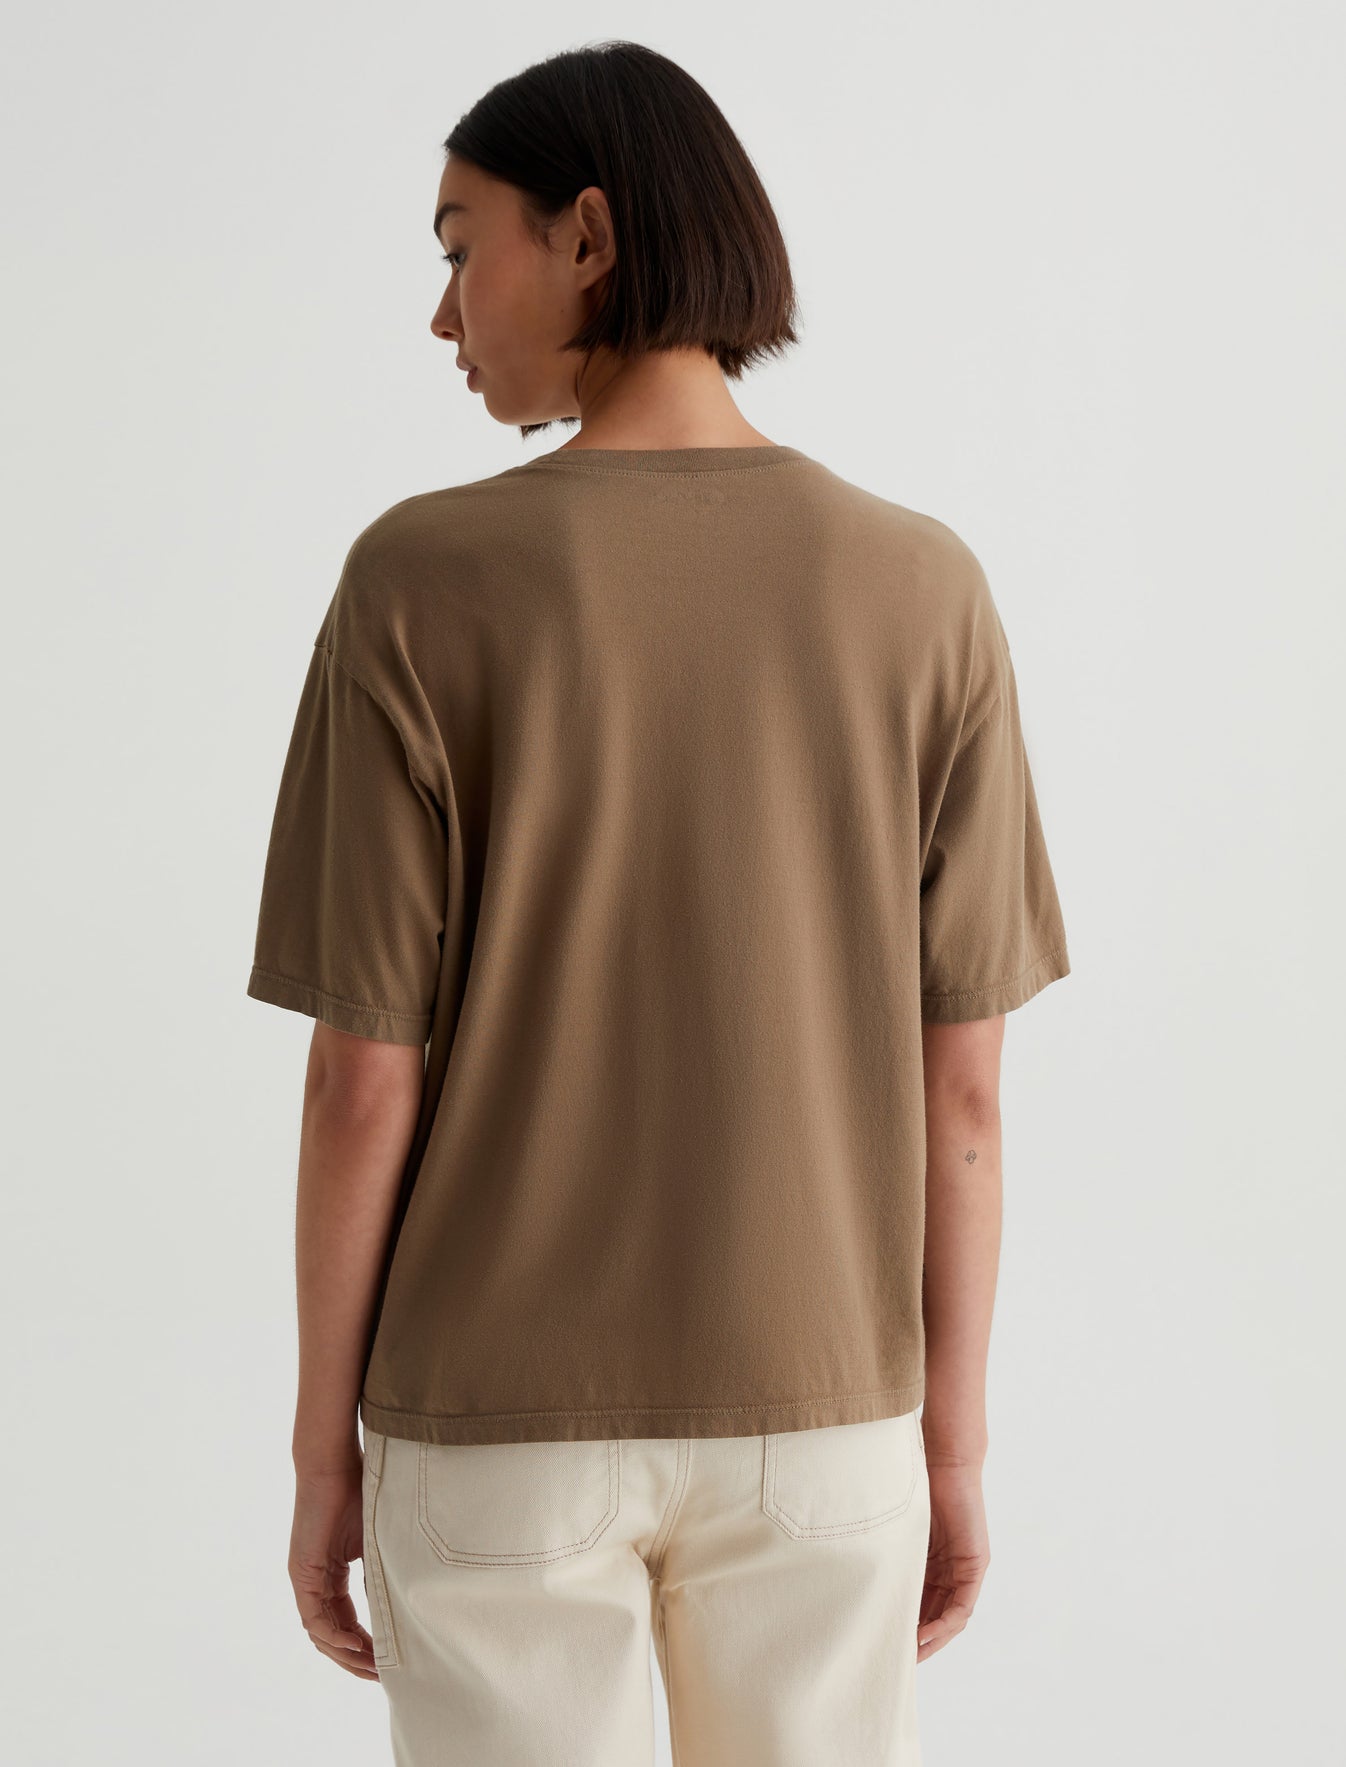 Karter Ex-Boyfriend Wild Mushroom Oversized Fit Short Sleeve Crew Neck T-Shirt Womens Top Photo 6